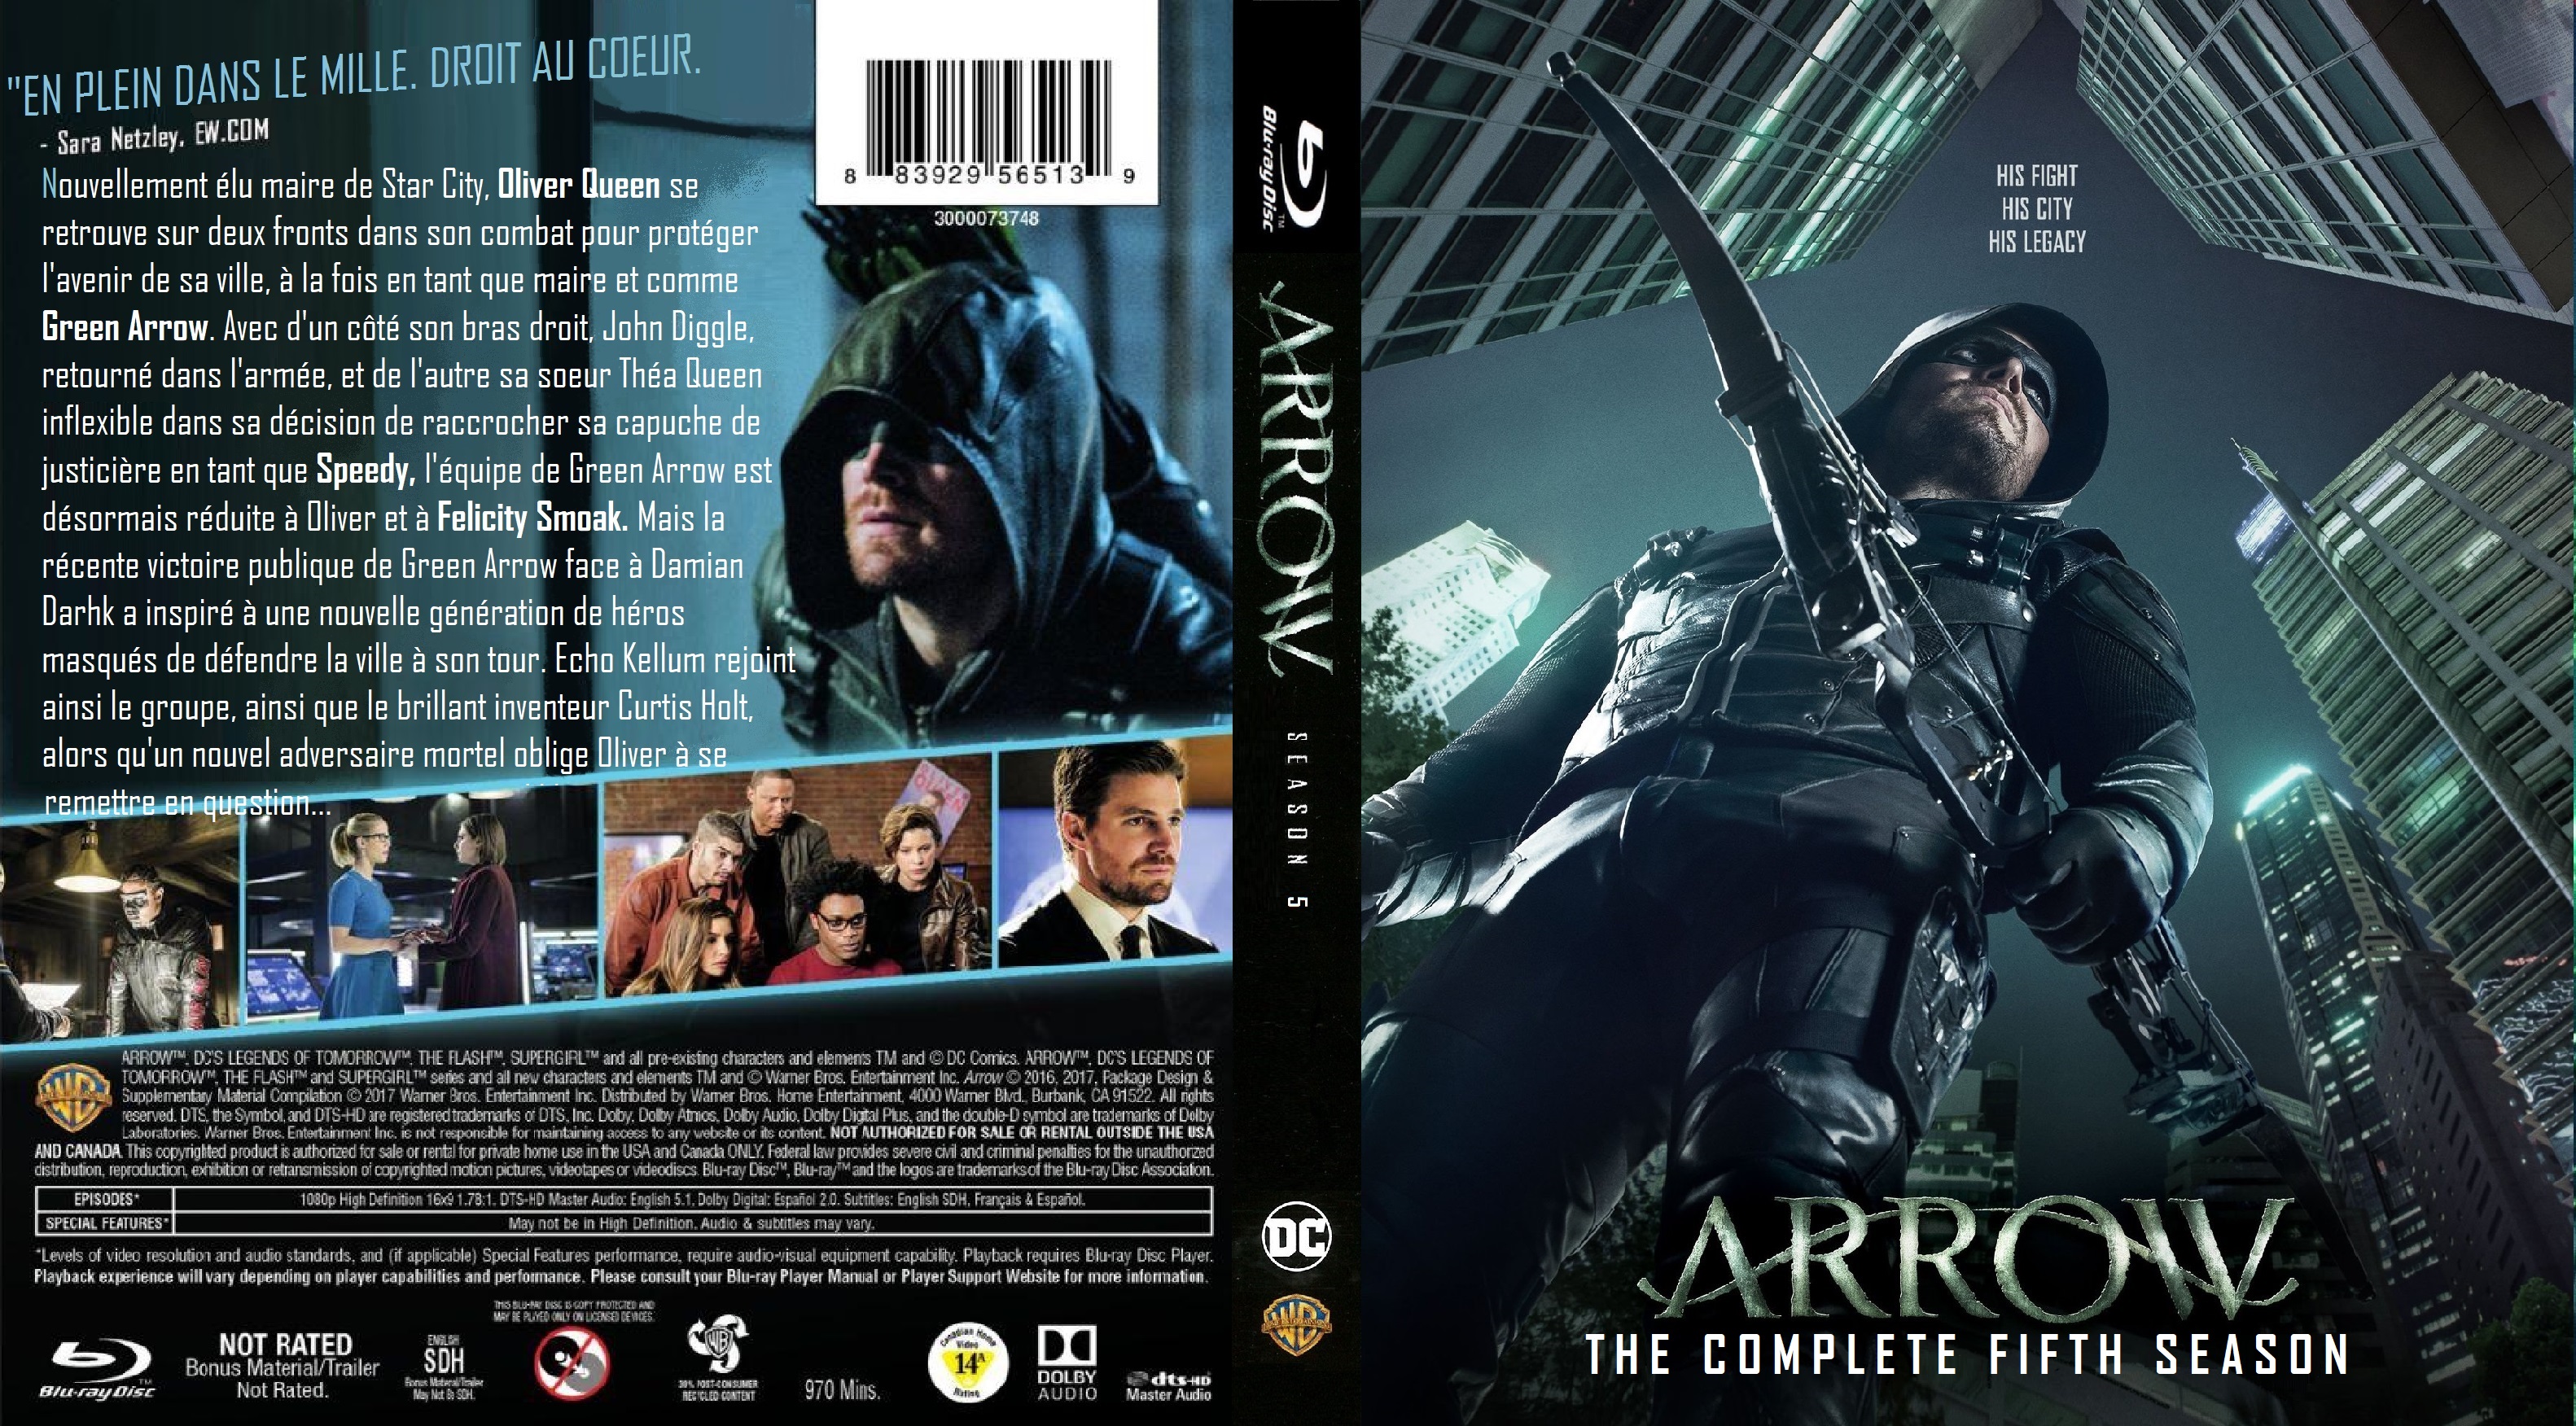 Jaquette DVD Arrow saison 5 custom (BLU-RAY) v3